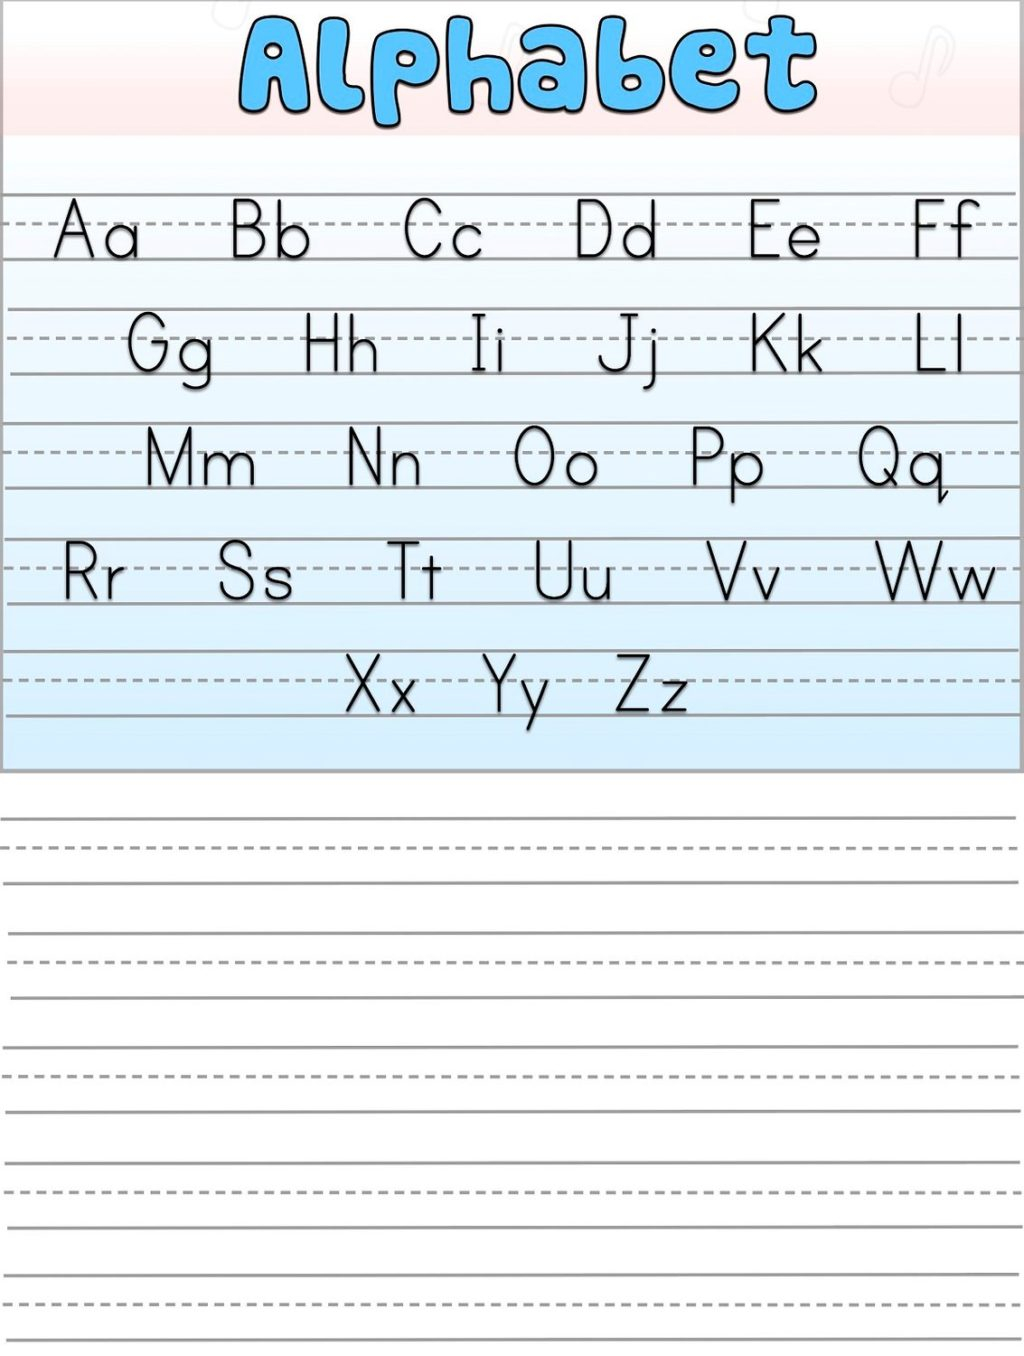 Alphabet Writing Practice Sheet Free Worksheets Pdf Download for Alphabet Worksheets Pdf Download